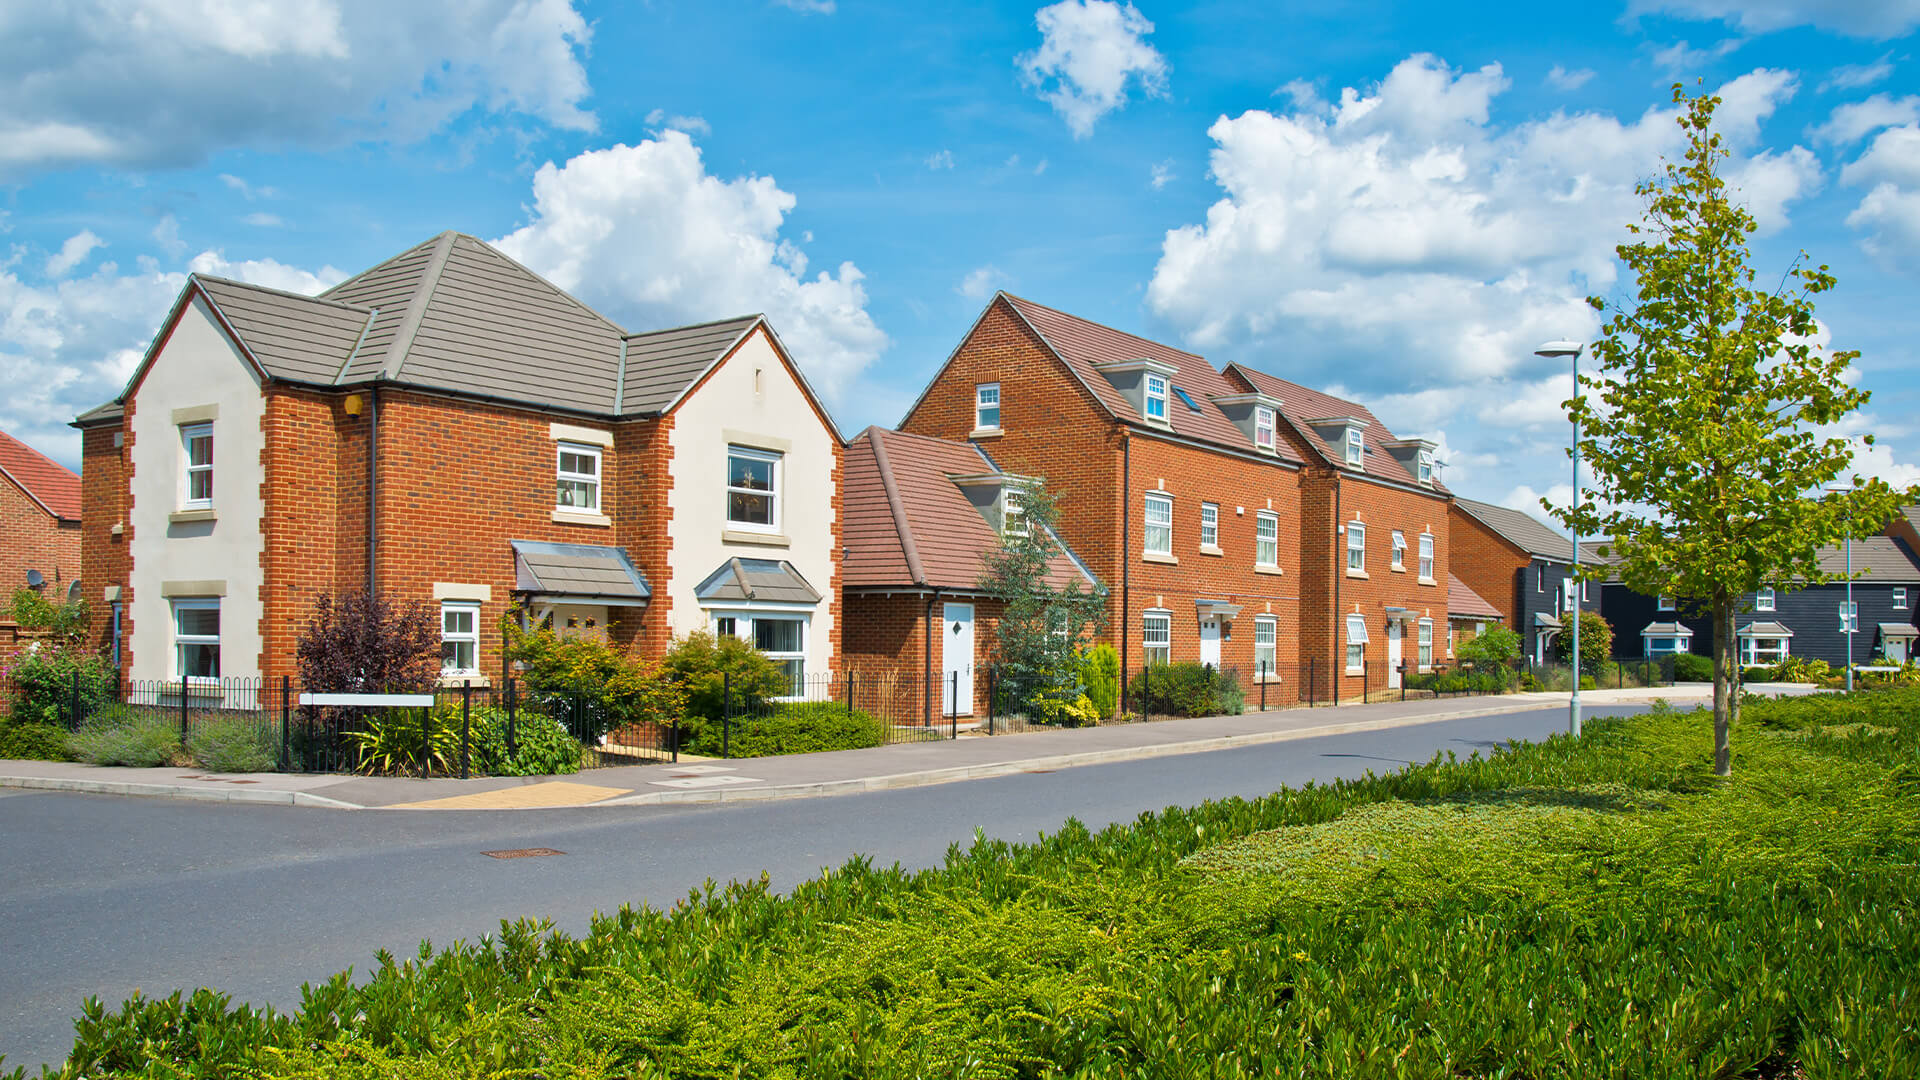 UK housing estate in the daytime